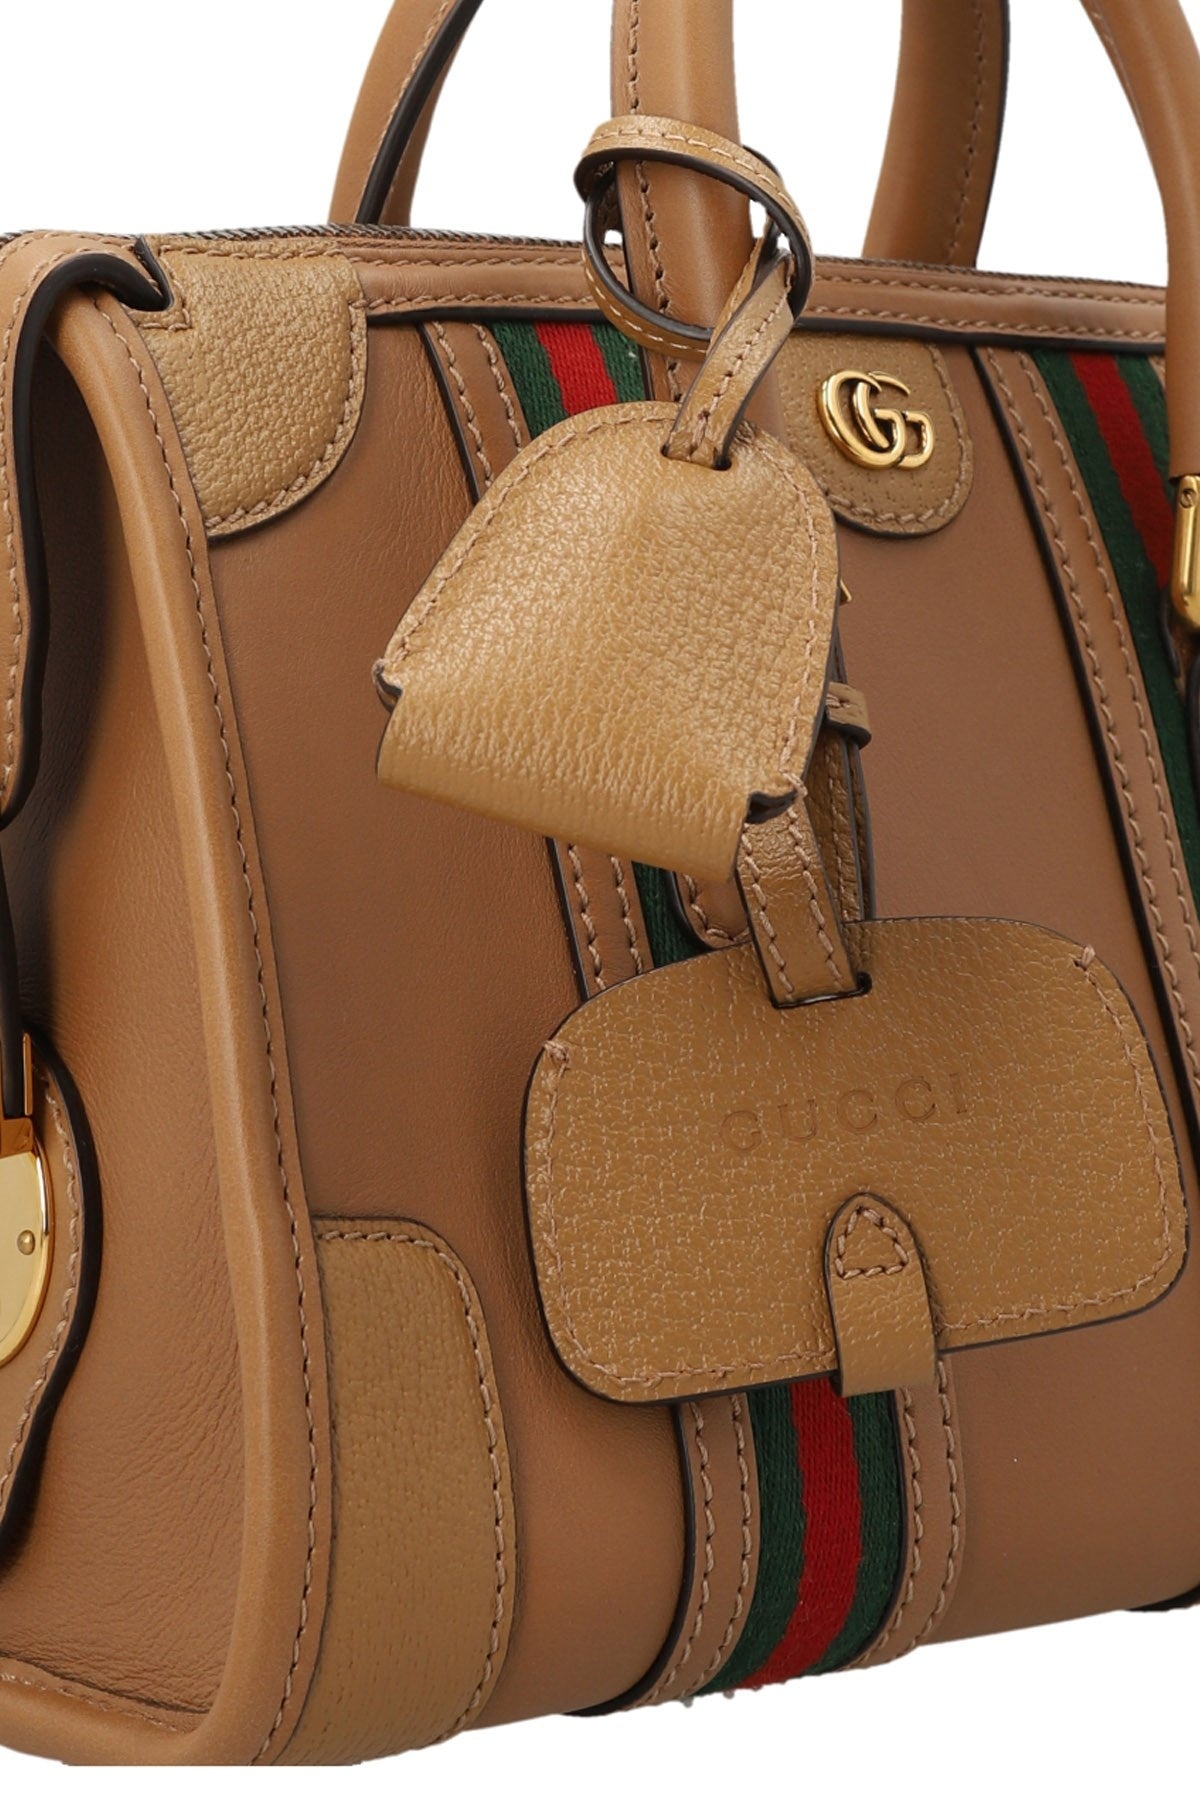 Gucci Women 'Double G' Small Handbag - 3